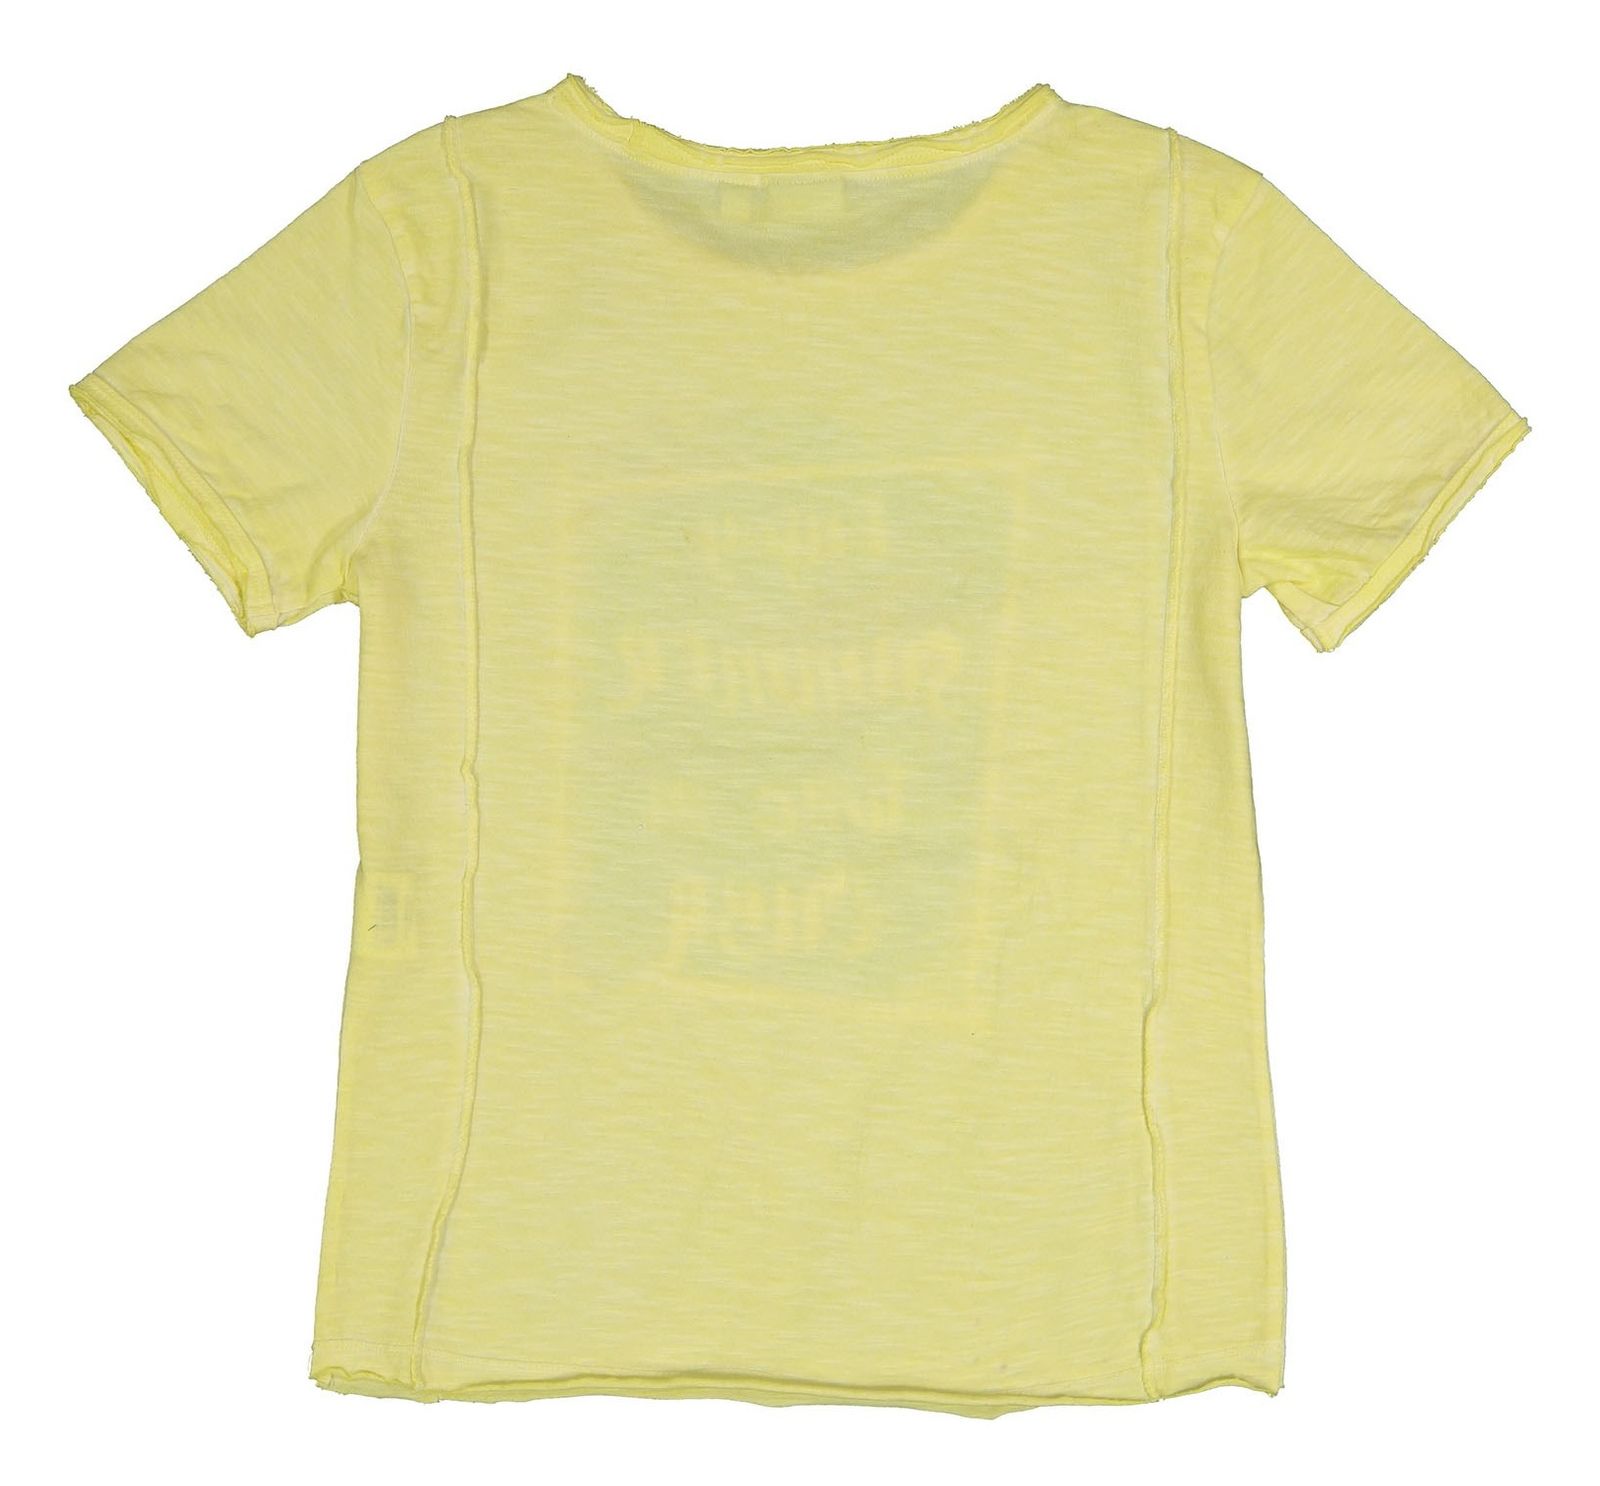 تی شرت نخی آستین کوتاه پسرانه - بلوکیدز - زرد - 3